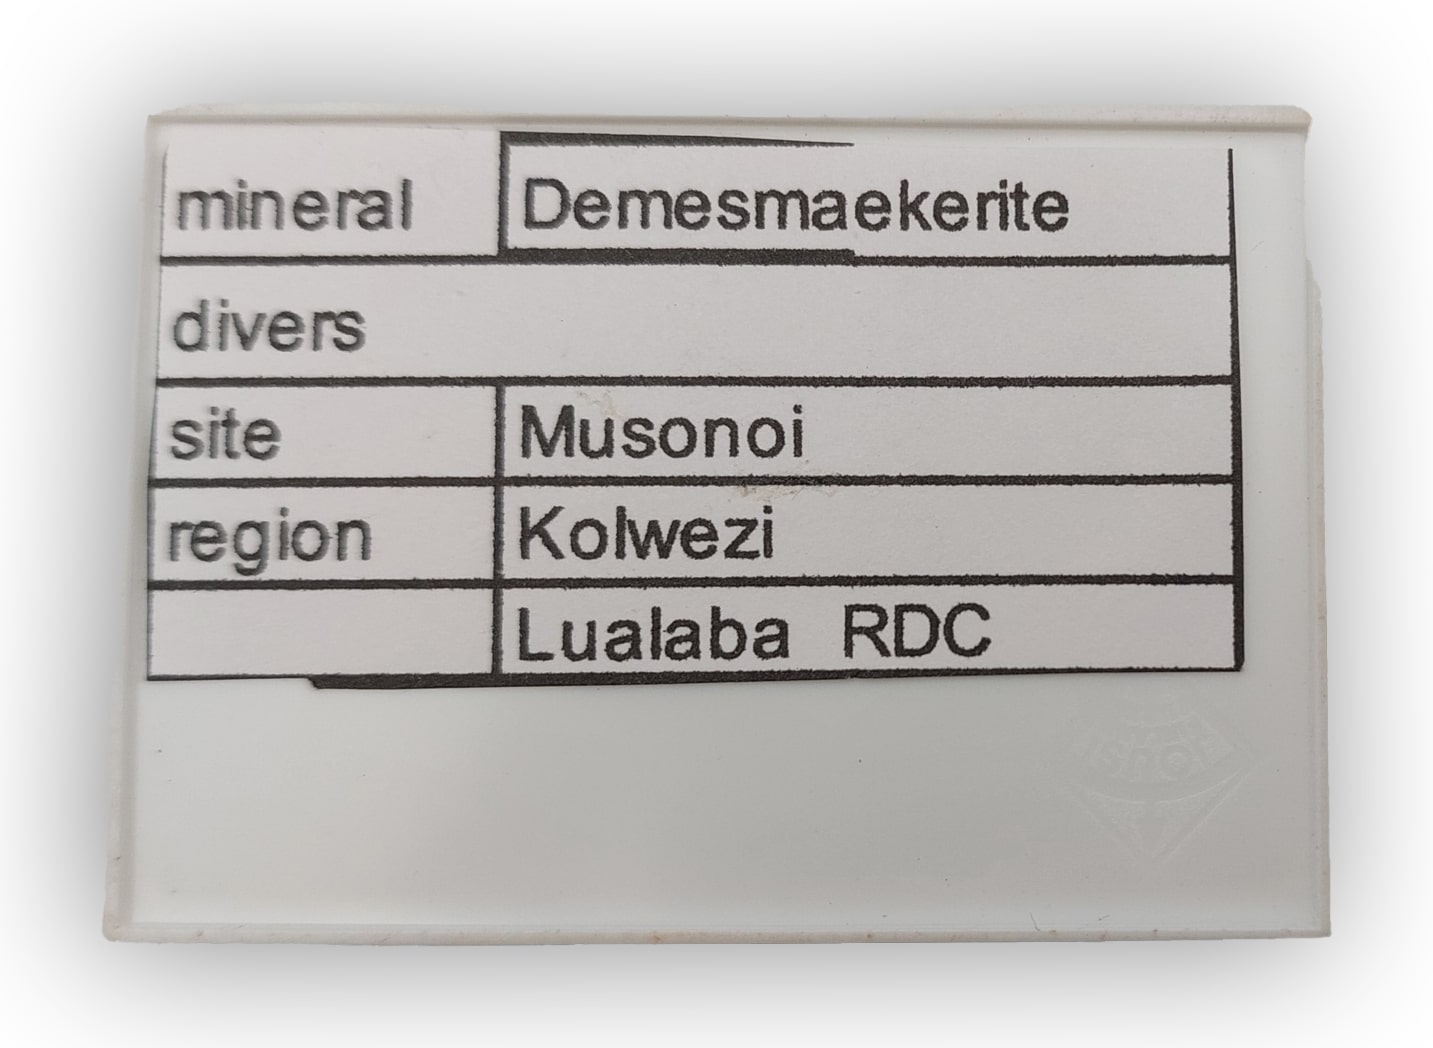 Demesmaekerite, Musonoi, Kolwezi, Katanga, Congo (RDC).